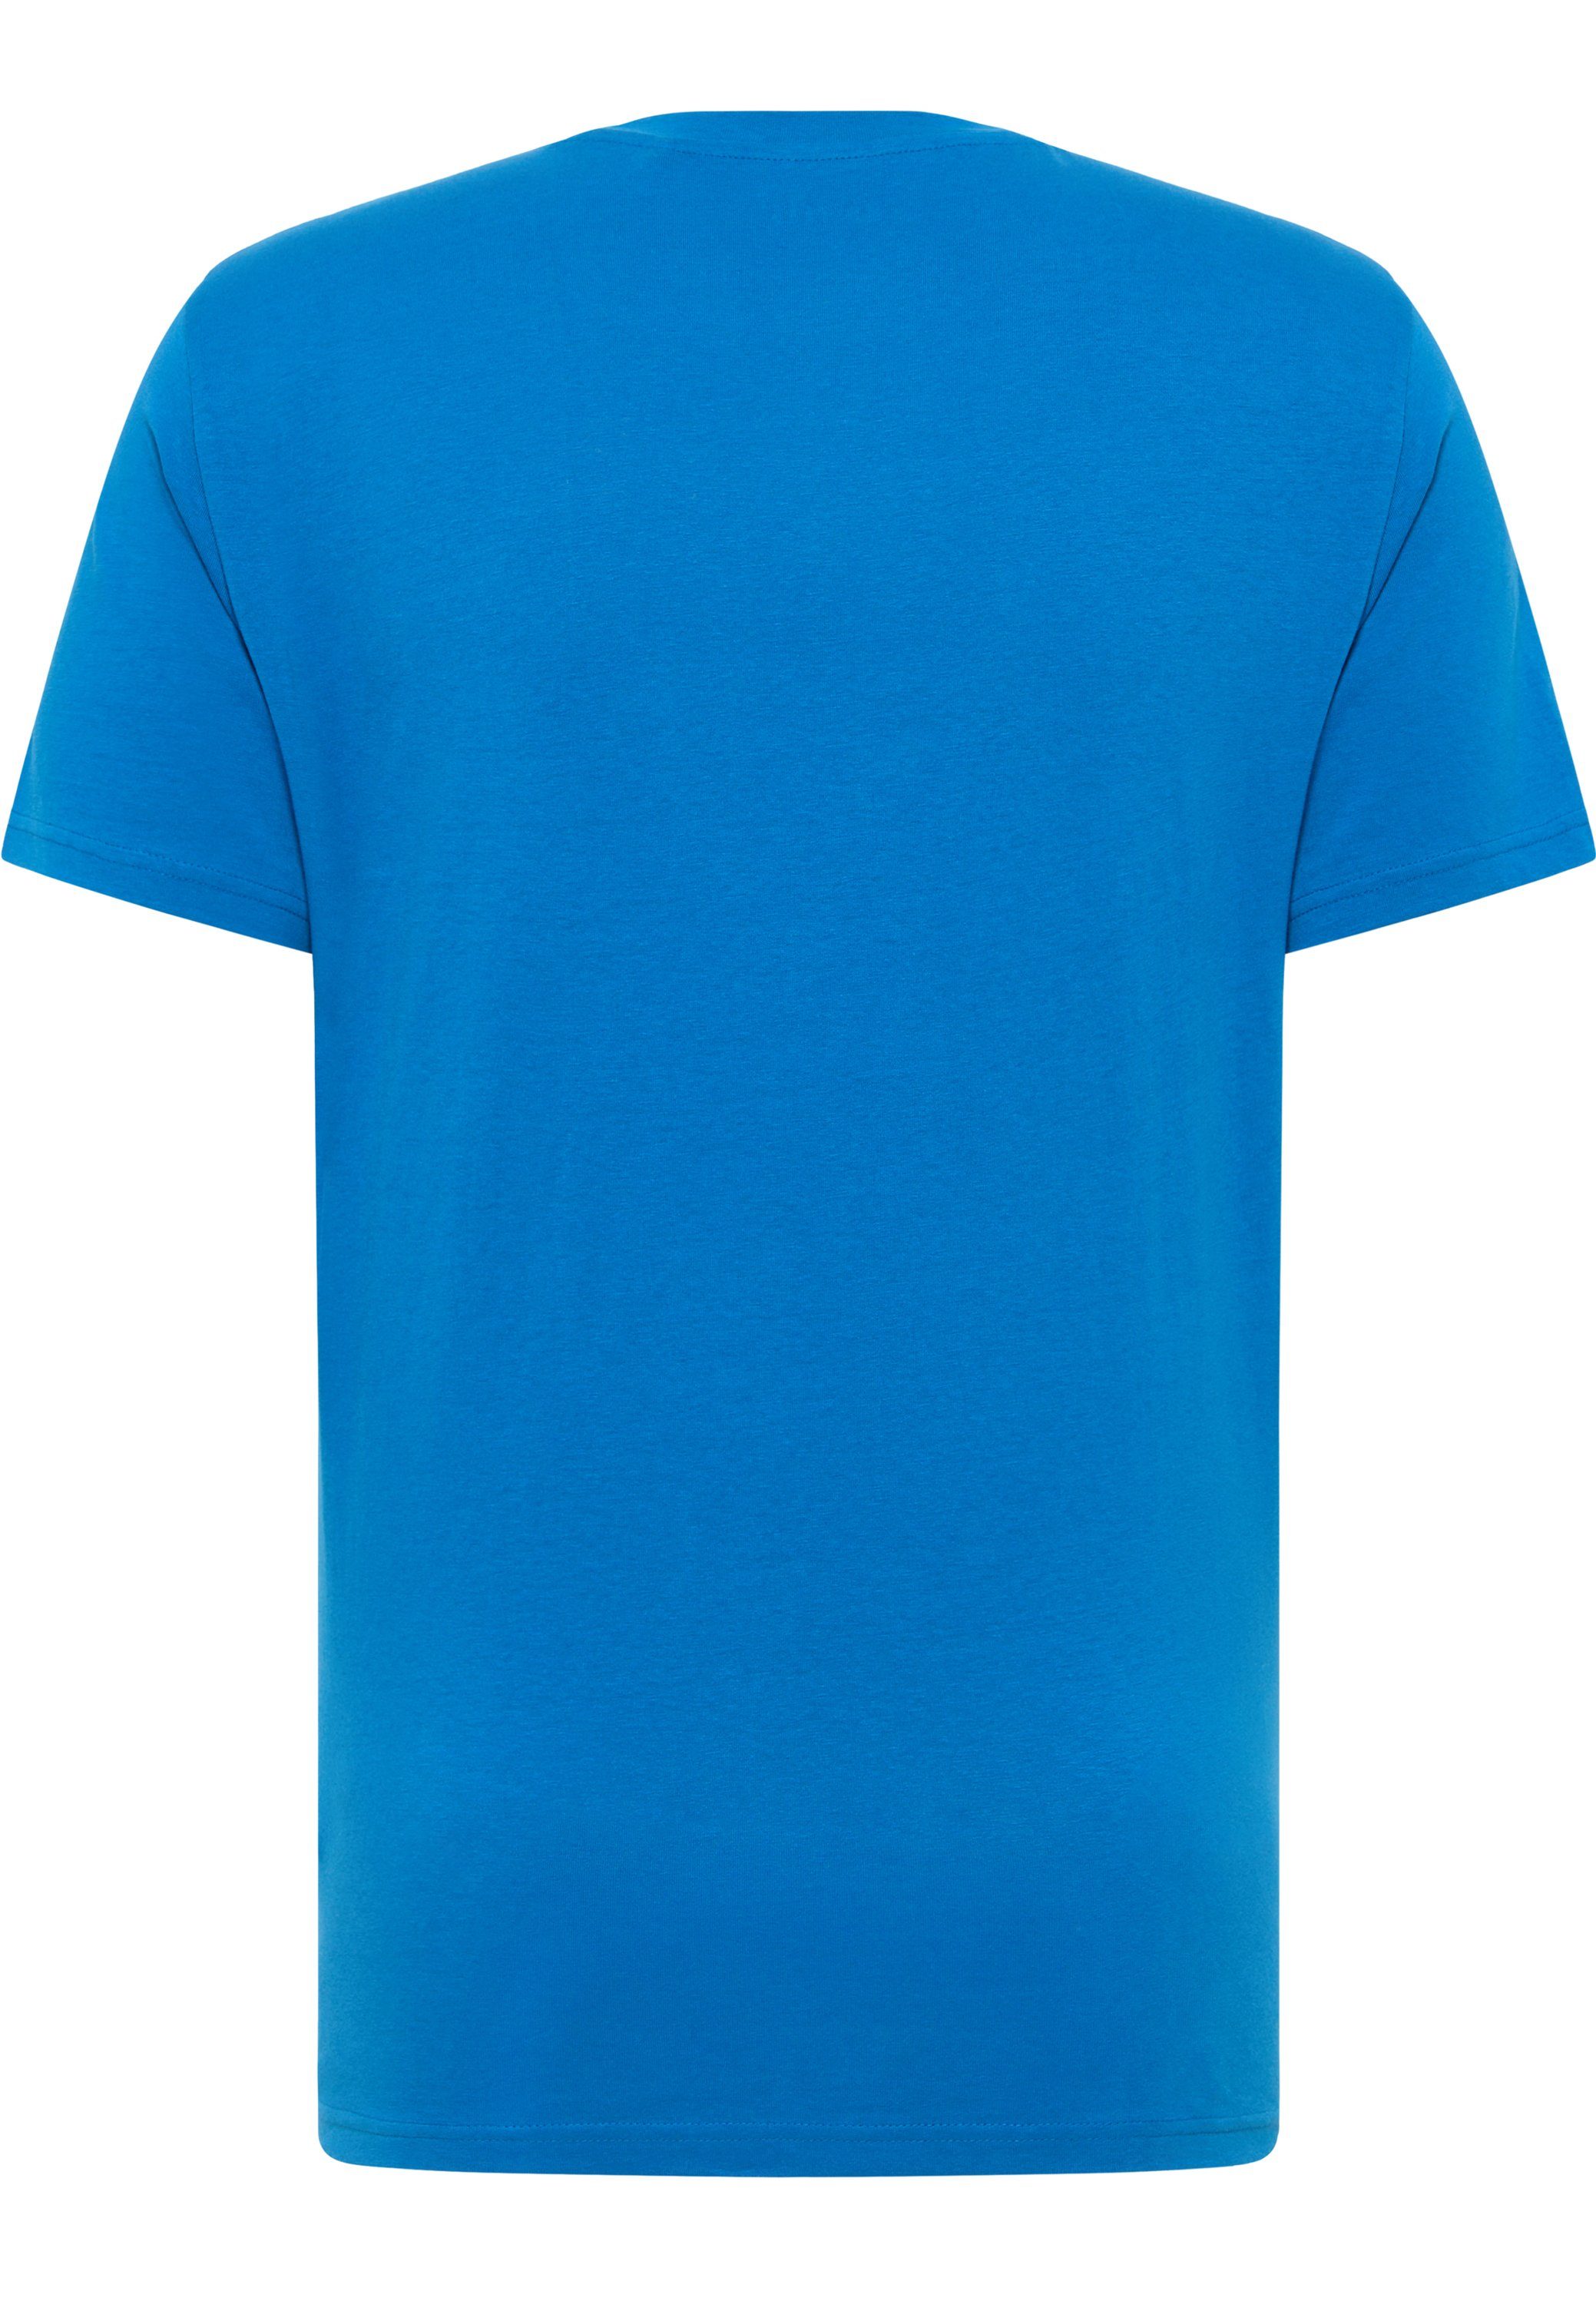 Print-Shirt MUSTANG Mustang blau Kurzarmshirt